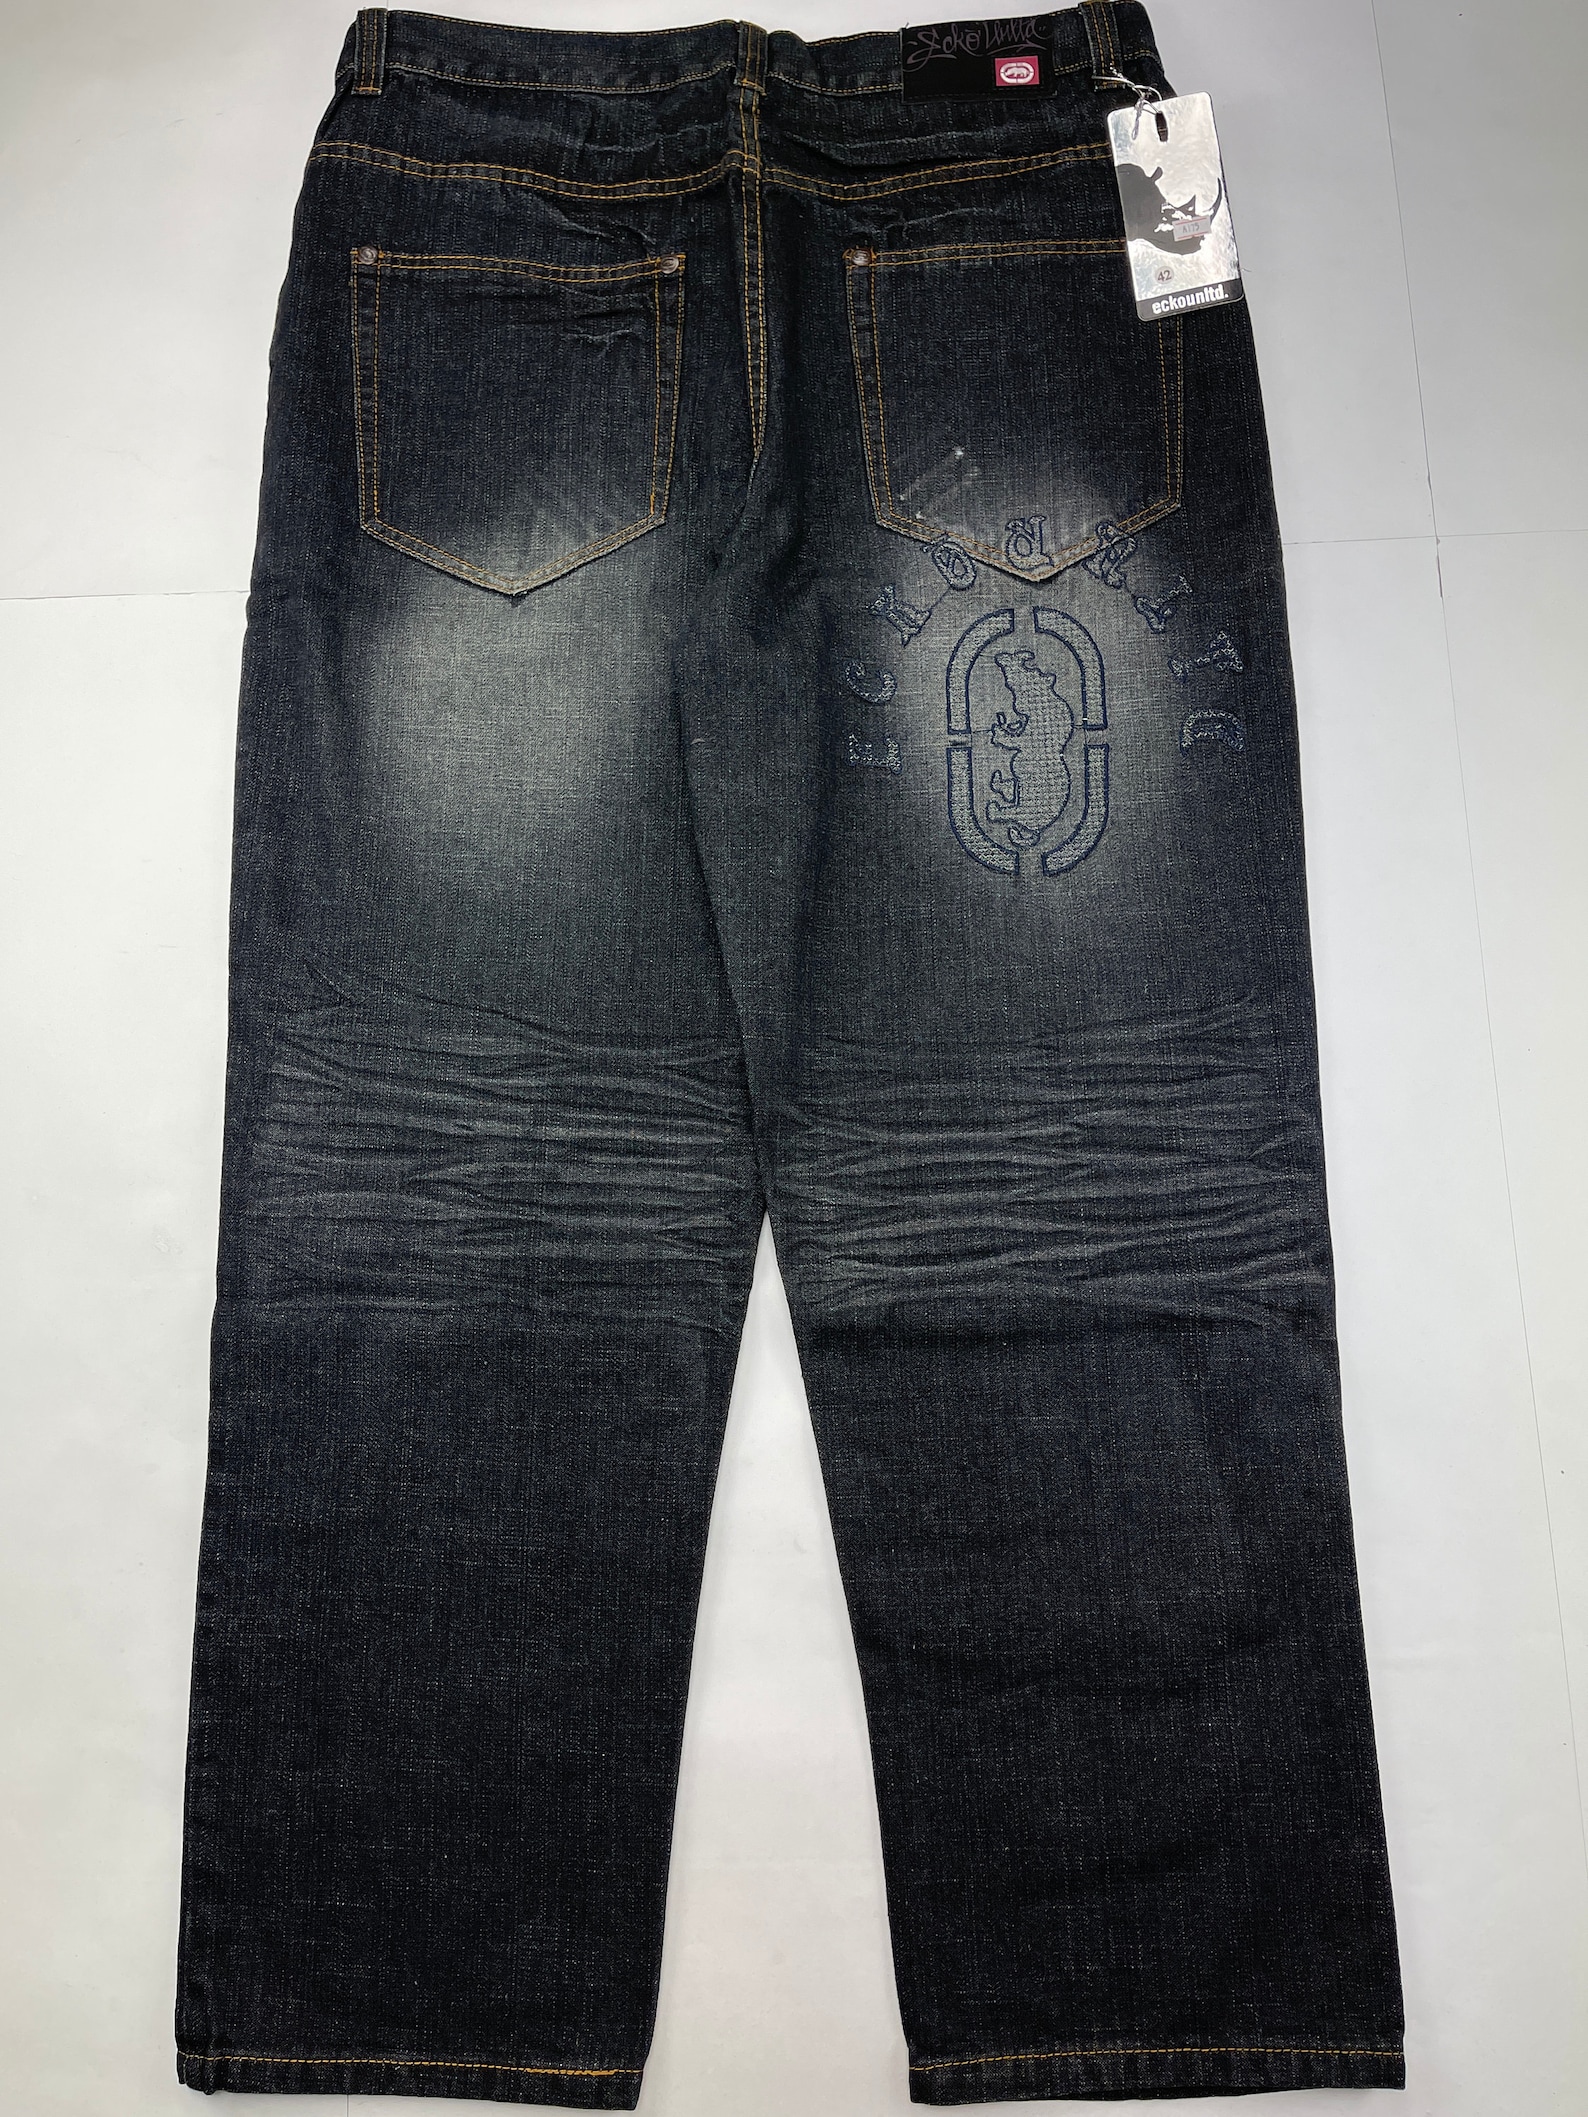 Ecko Unltd jeans black vintage baggy pants deadstock 90s | Etsy